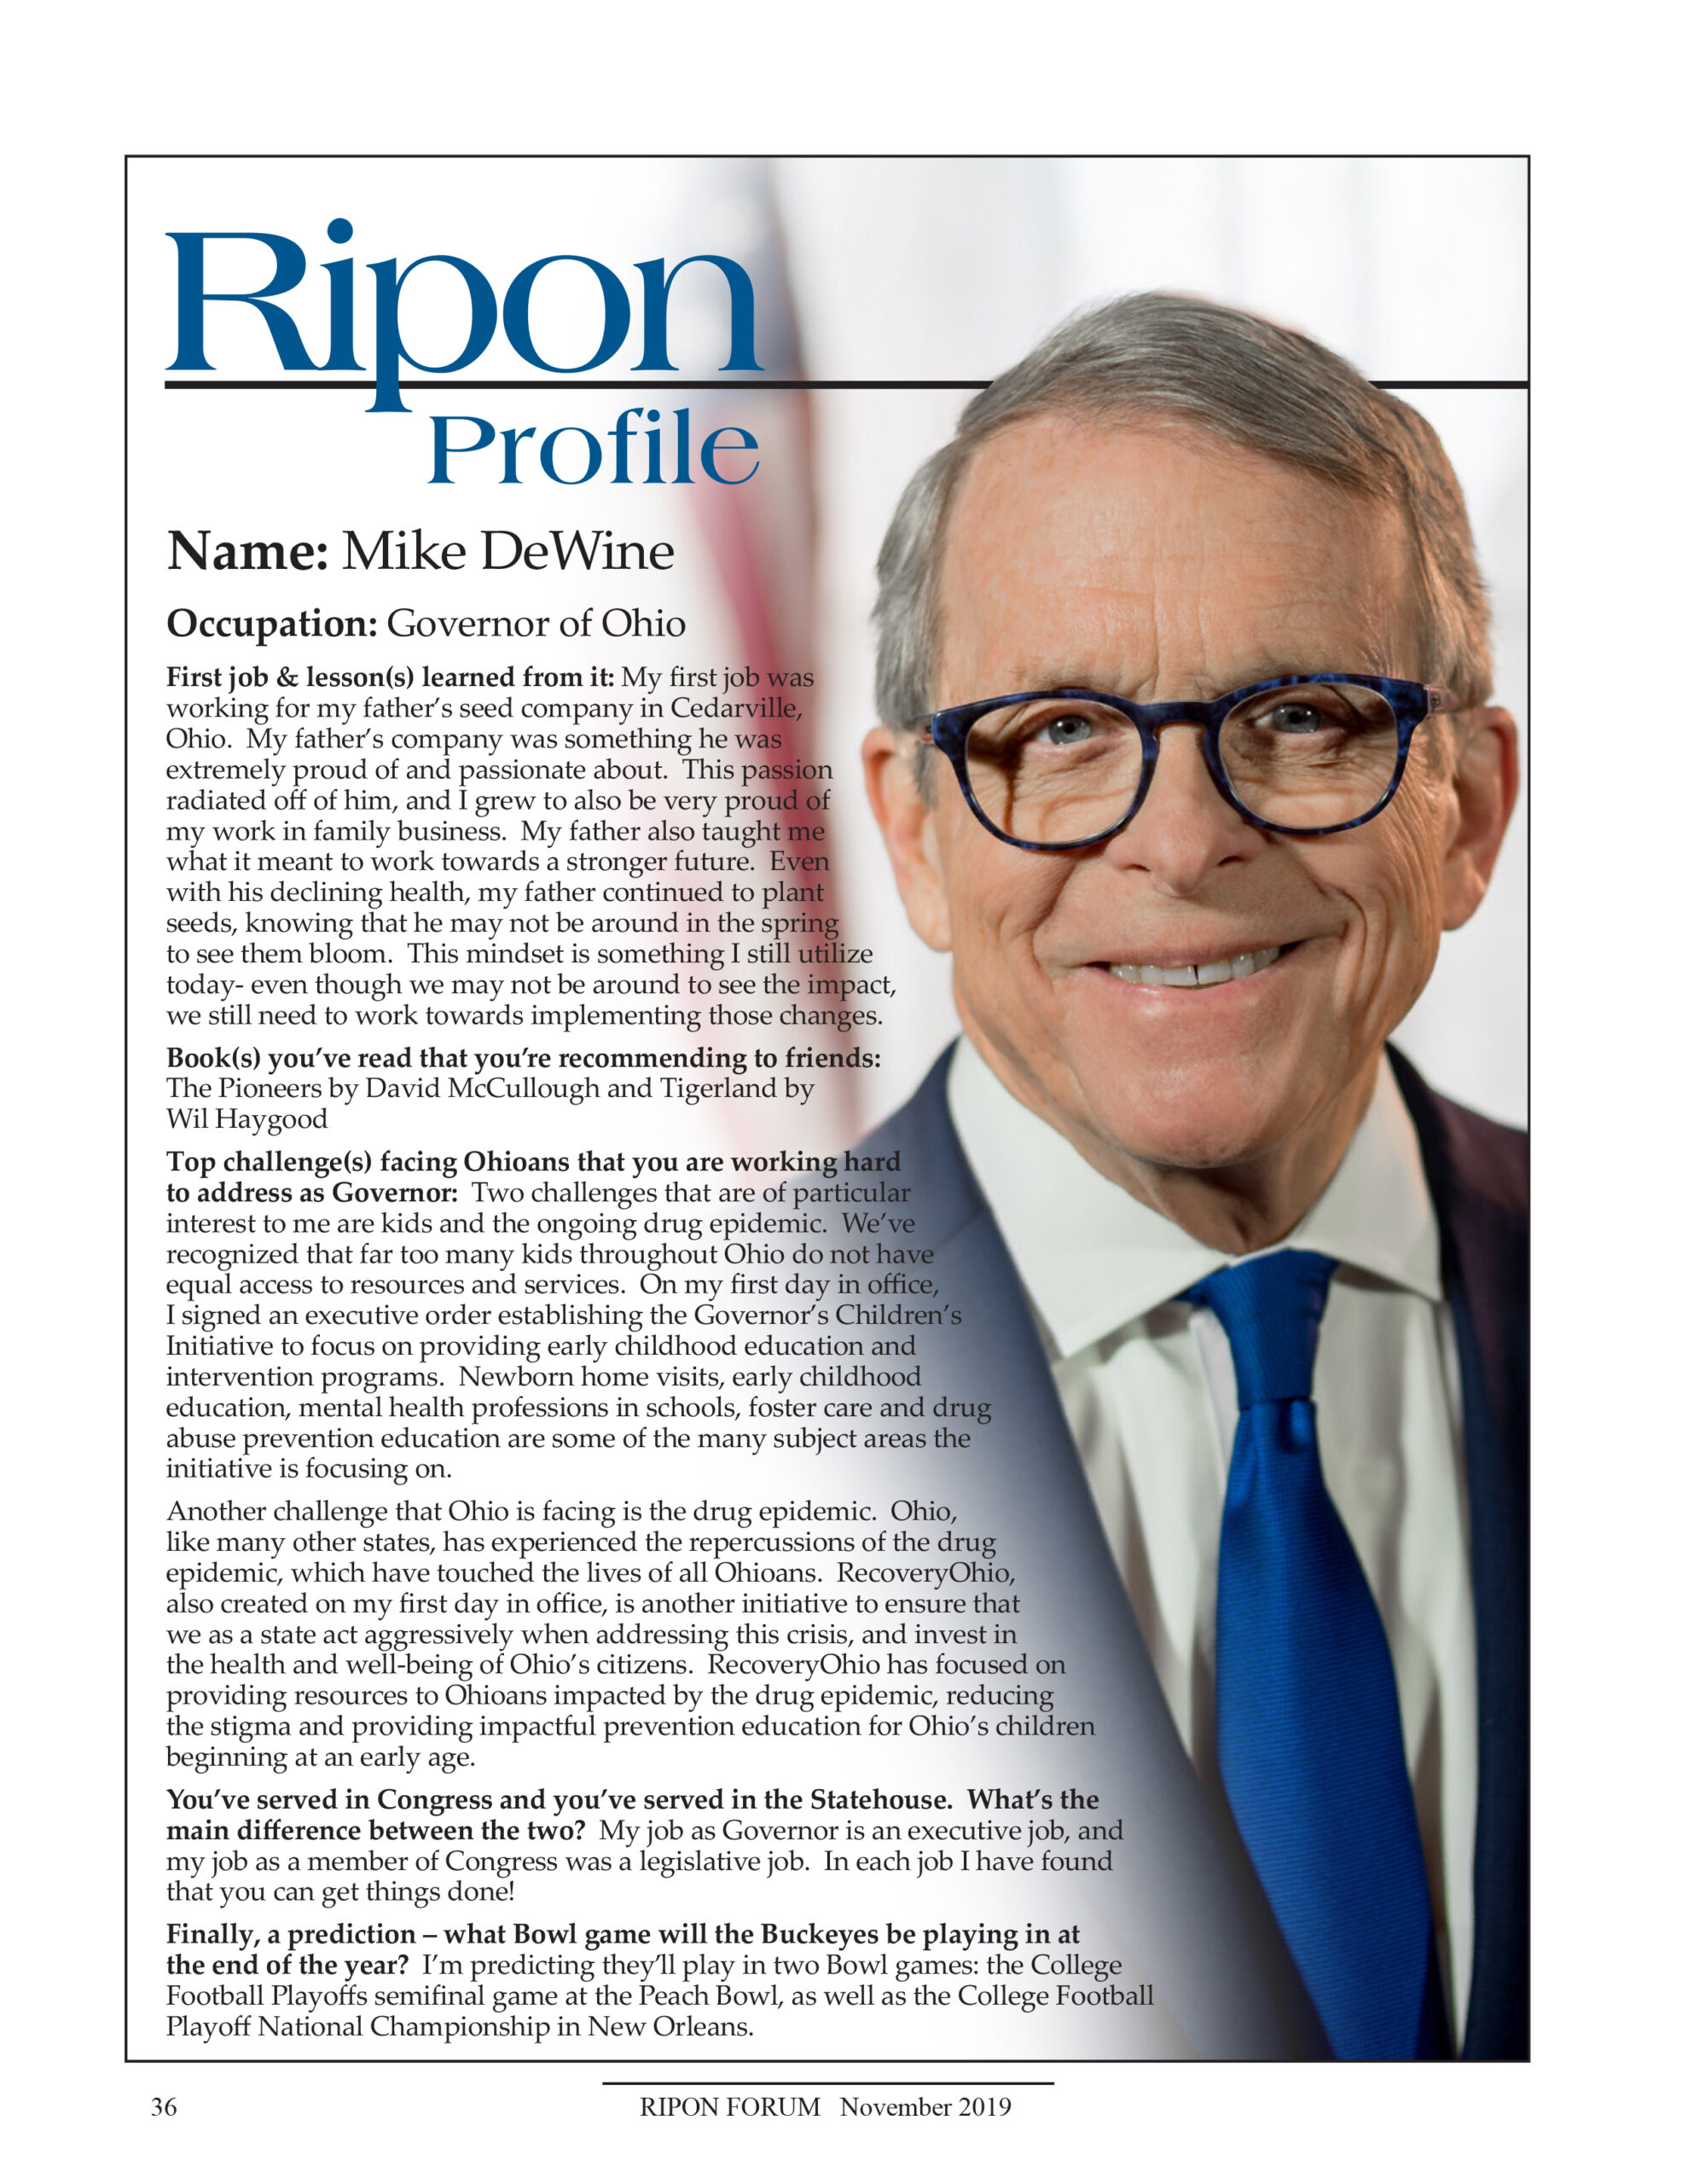 Ripon Profile of Mike DeWine